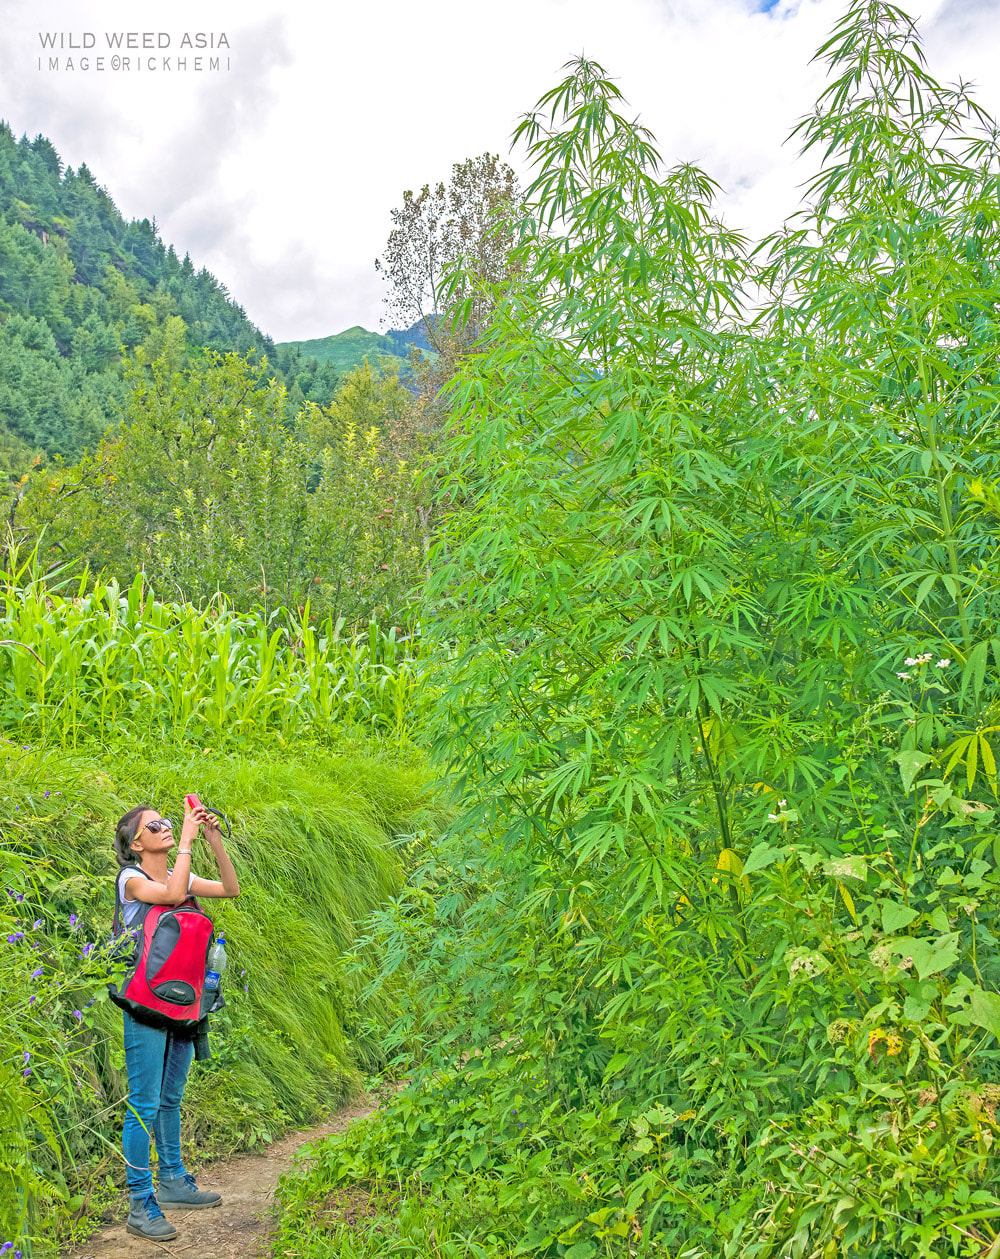 solo overland travel Asia, wild hemp cannabis,  Asia hemp industry, Gunja, Bhang, hemp, dope, weed, cannabis, marijuana, pot, buds, grass, spliff, image by Rick Hemi